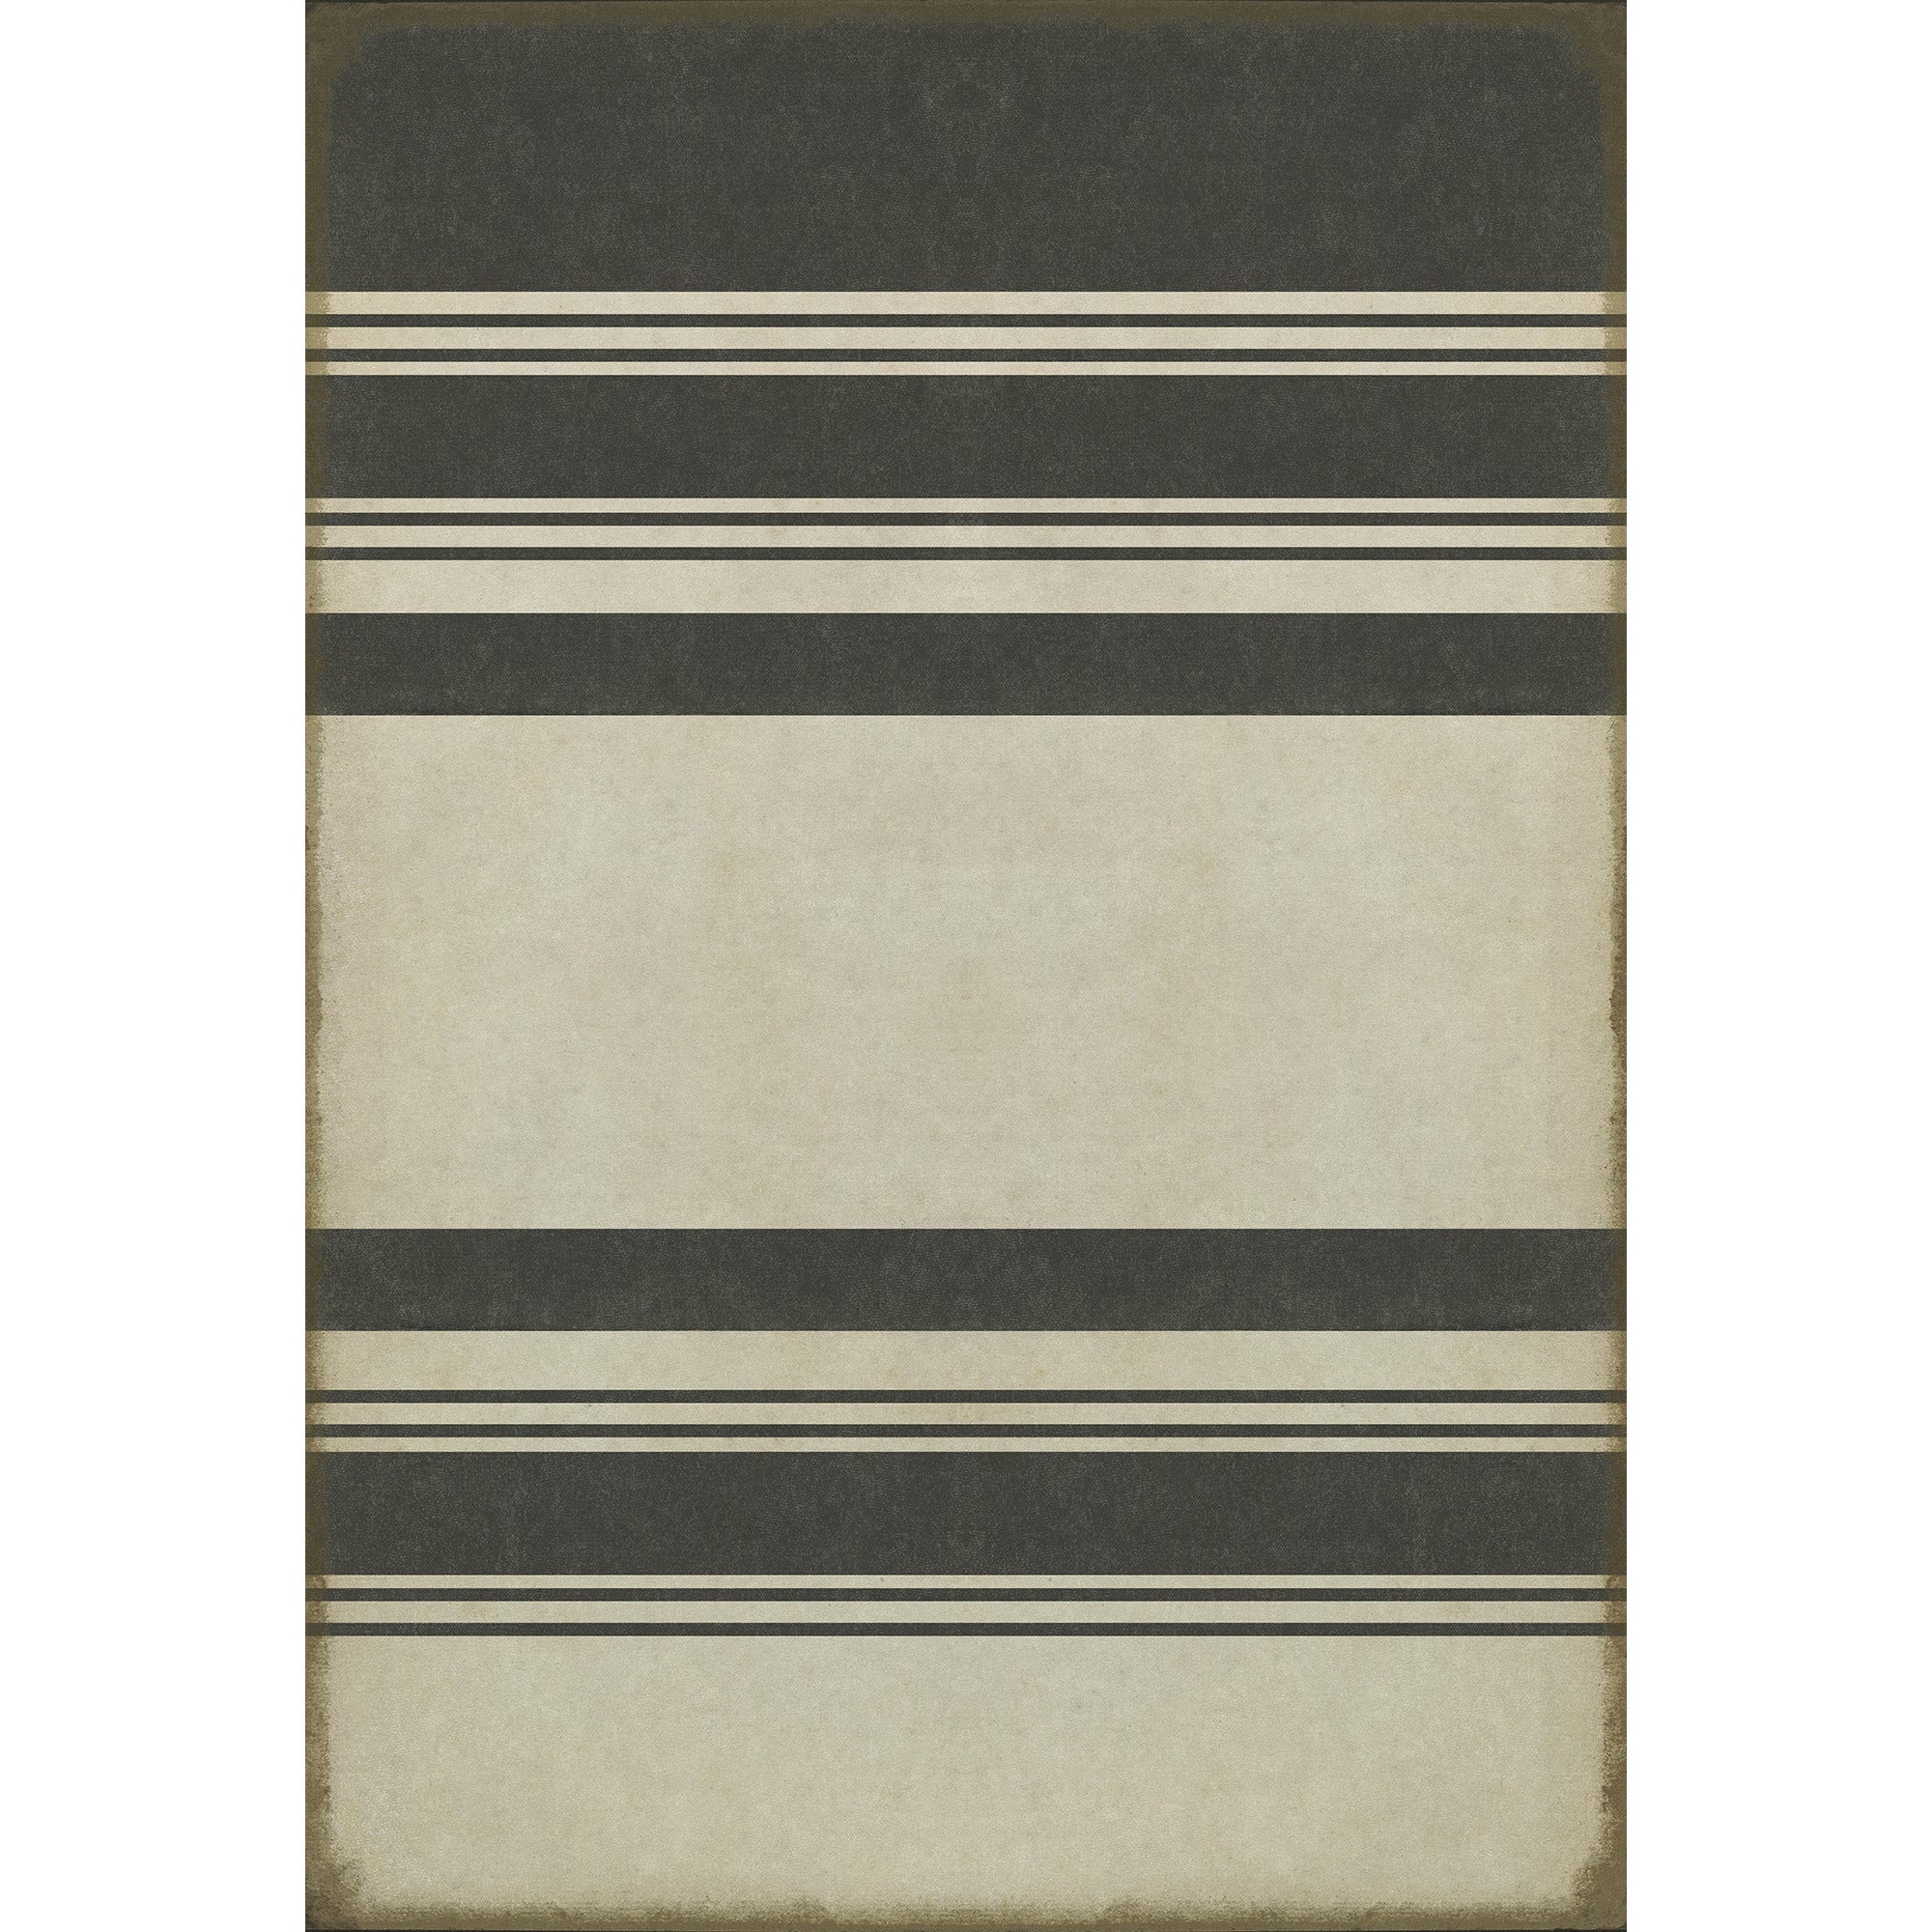 Pattern 50 Organic Stripes Black and White Vinyl Floor Cloth